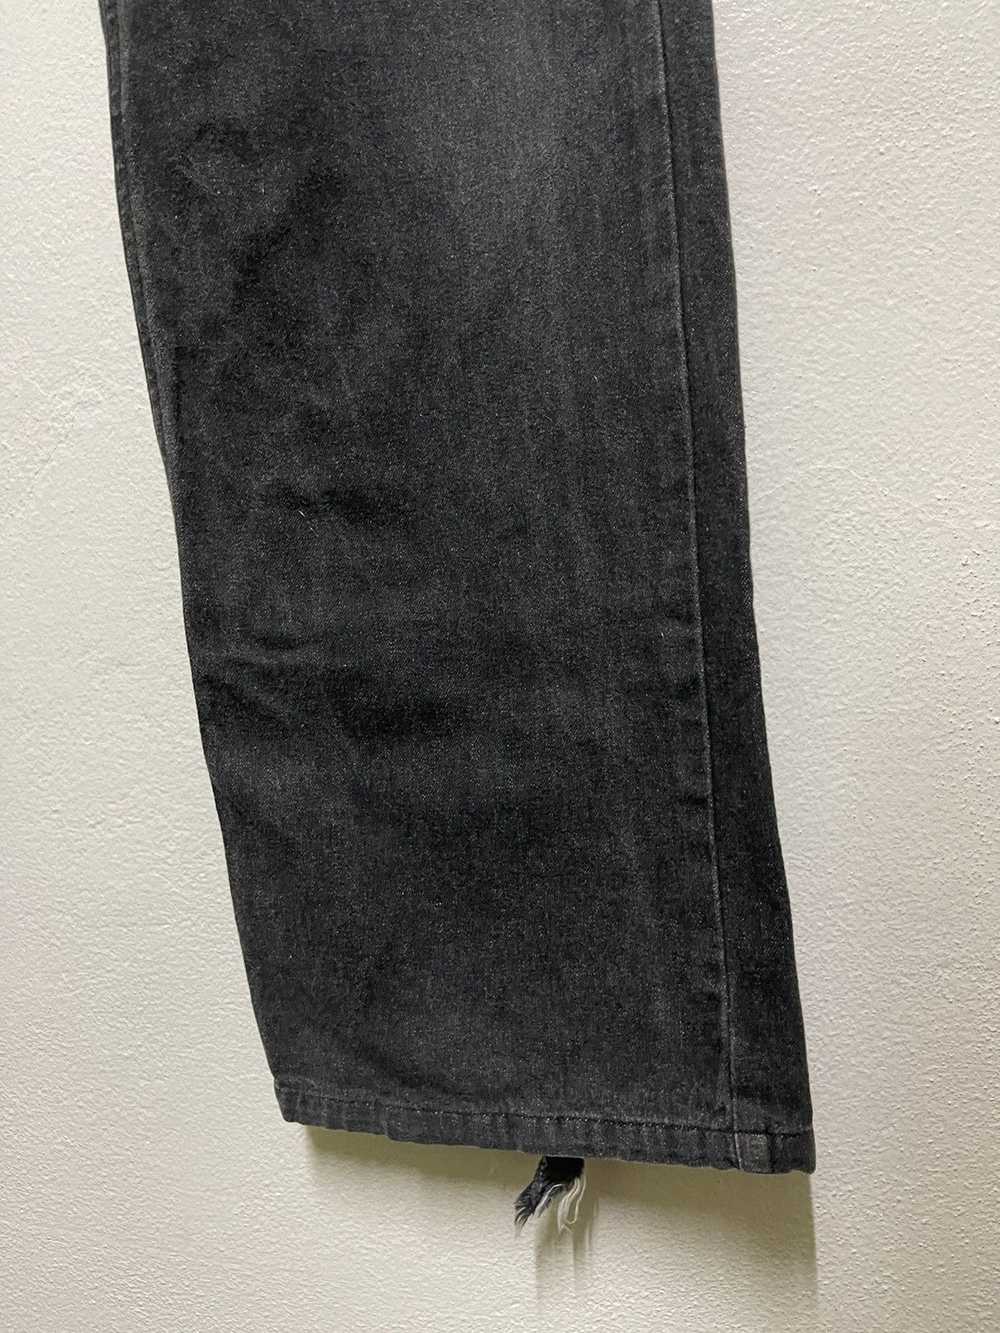 Japanese Brand Super Lovers Black Jeans - image 7